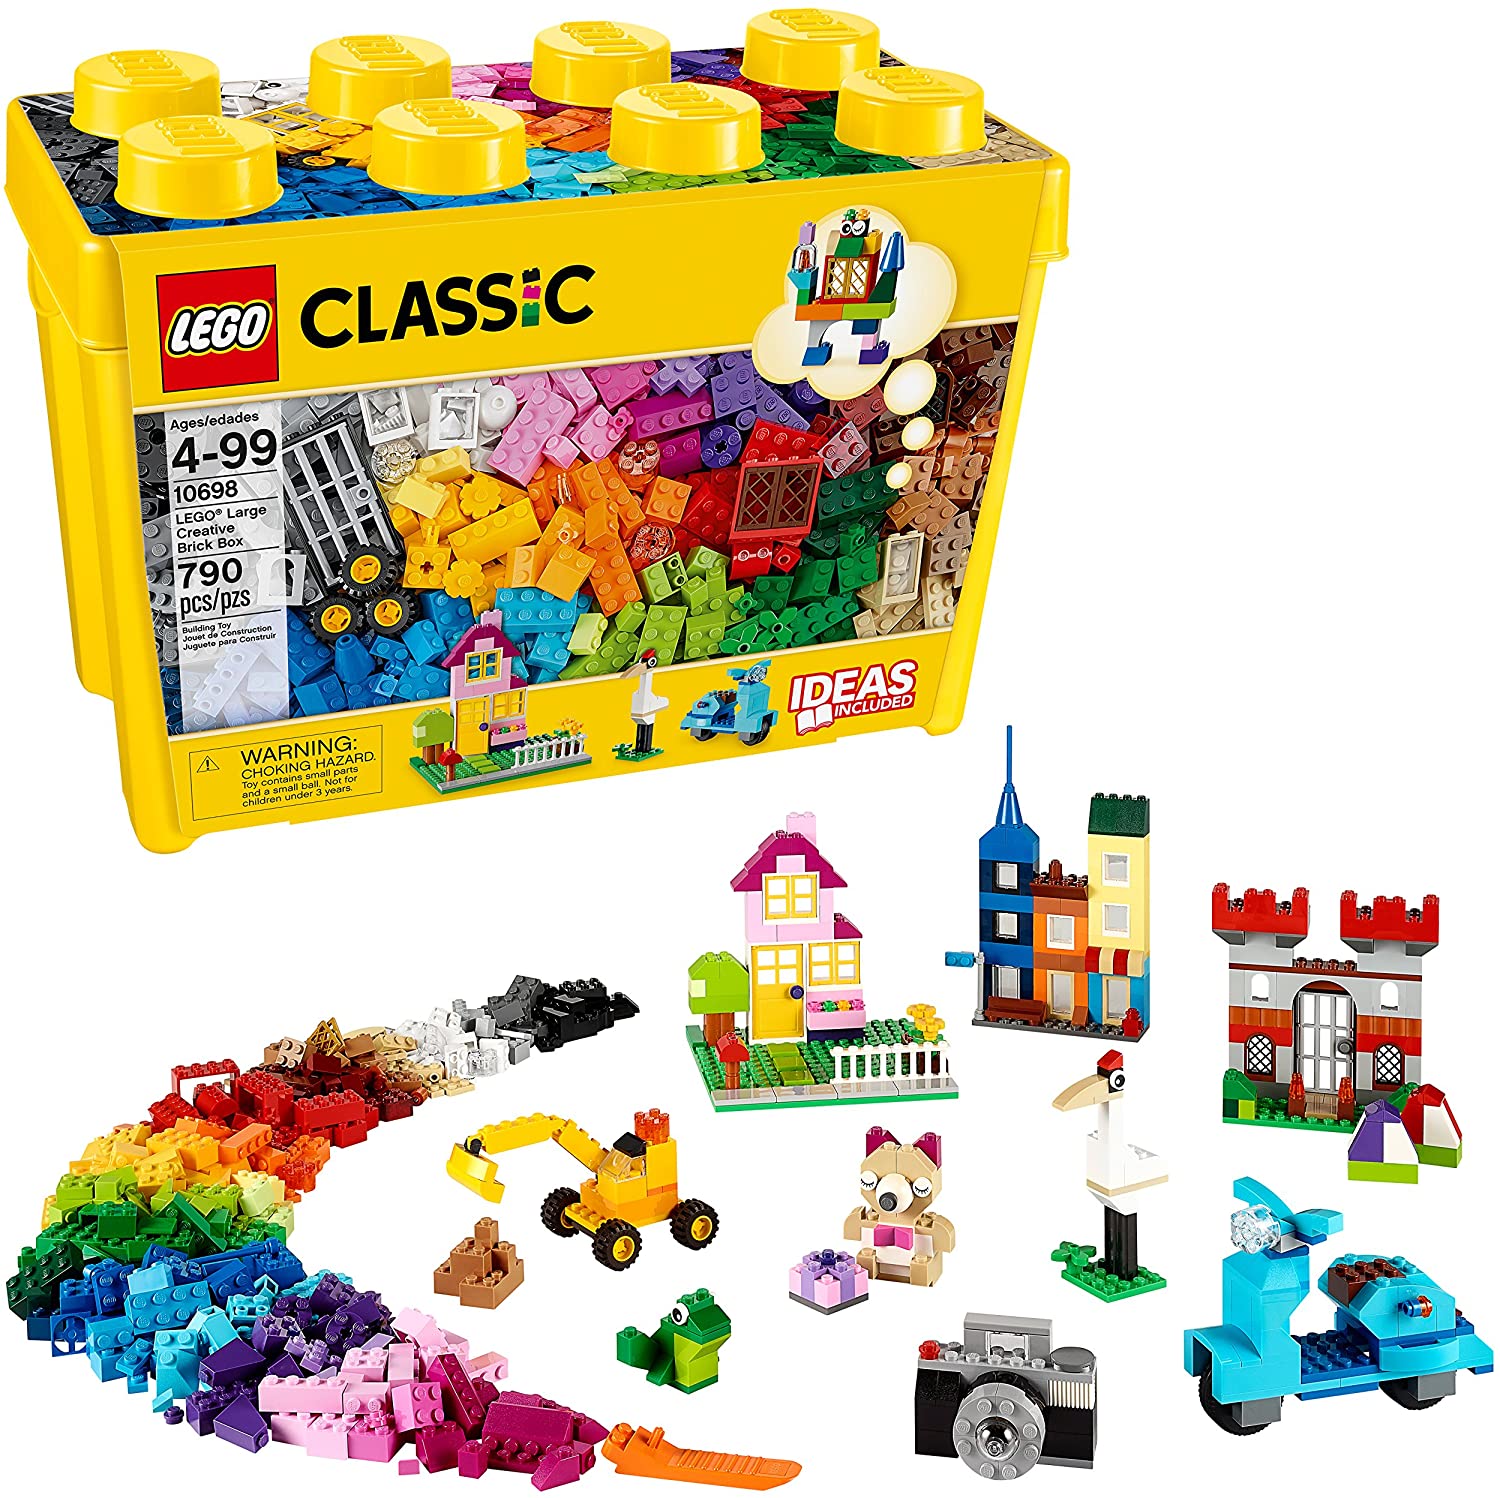 LEGO Classic Large Creative Brick Box 10698 Building Toy $37.95 shipped